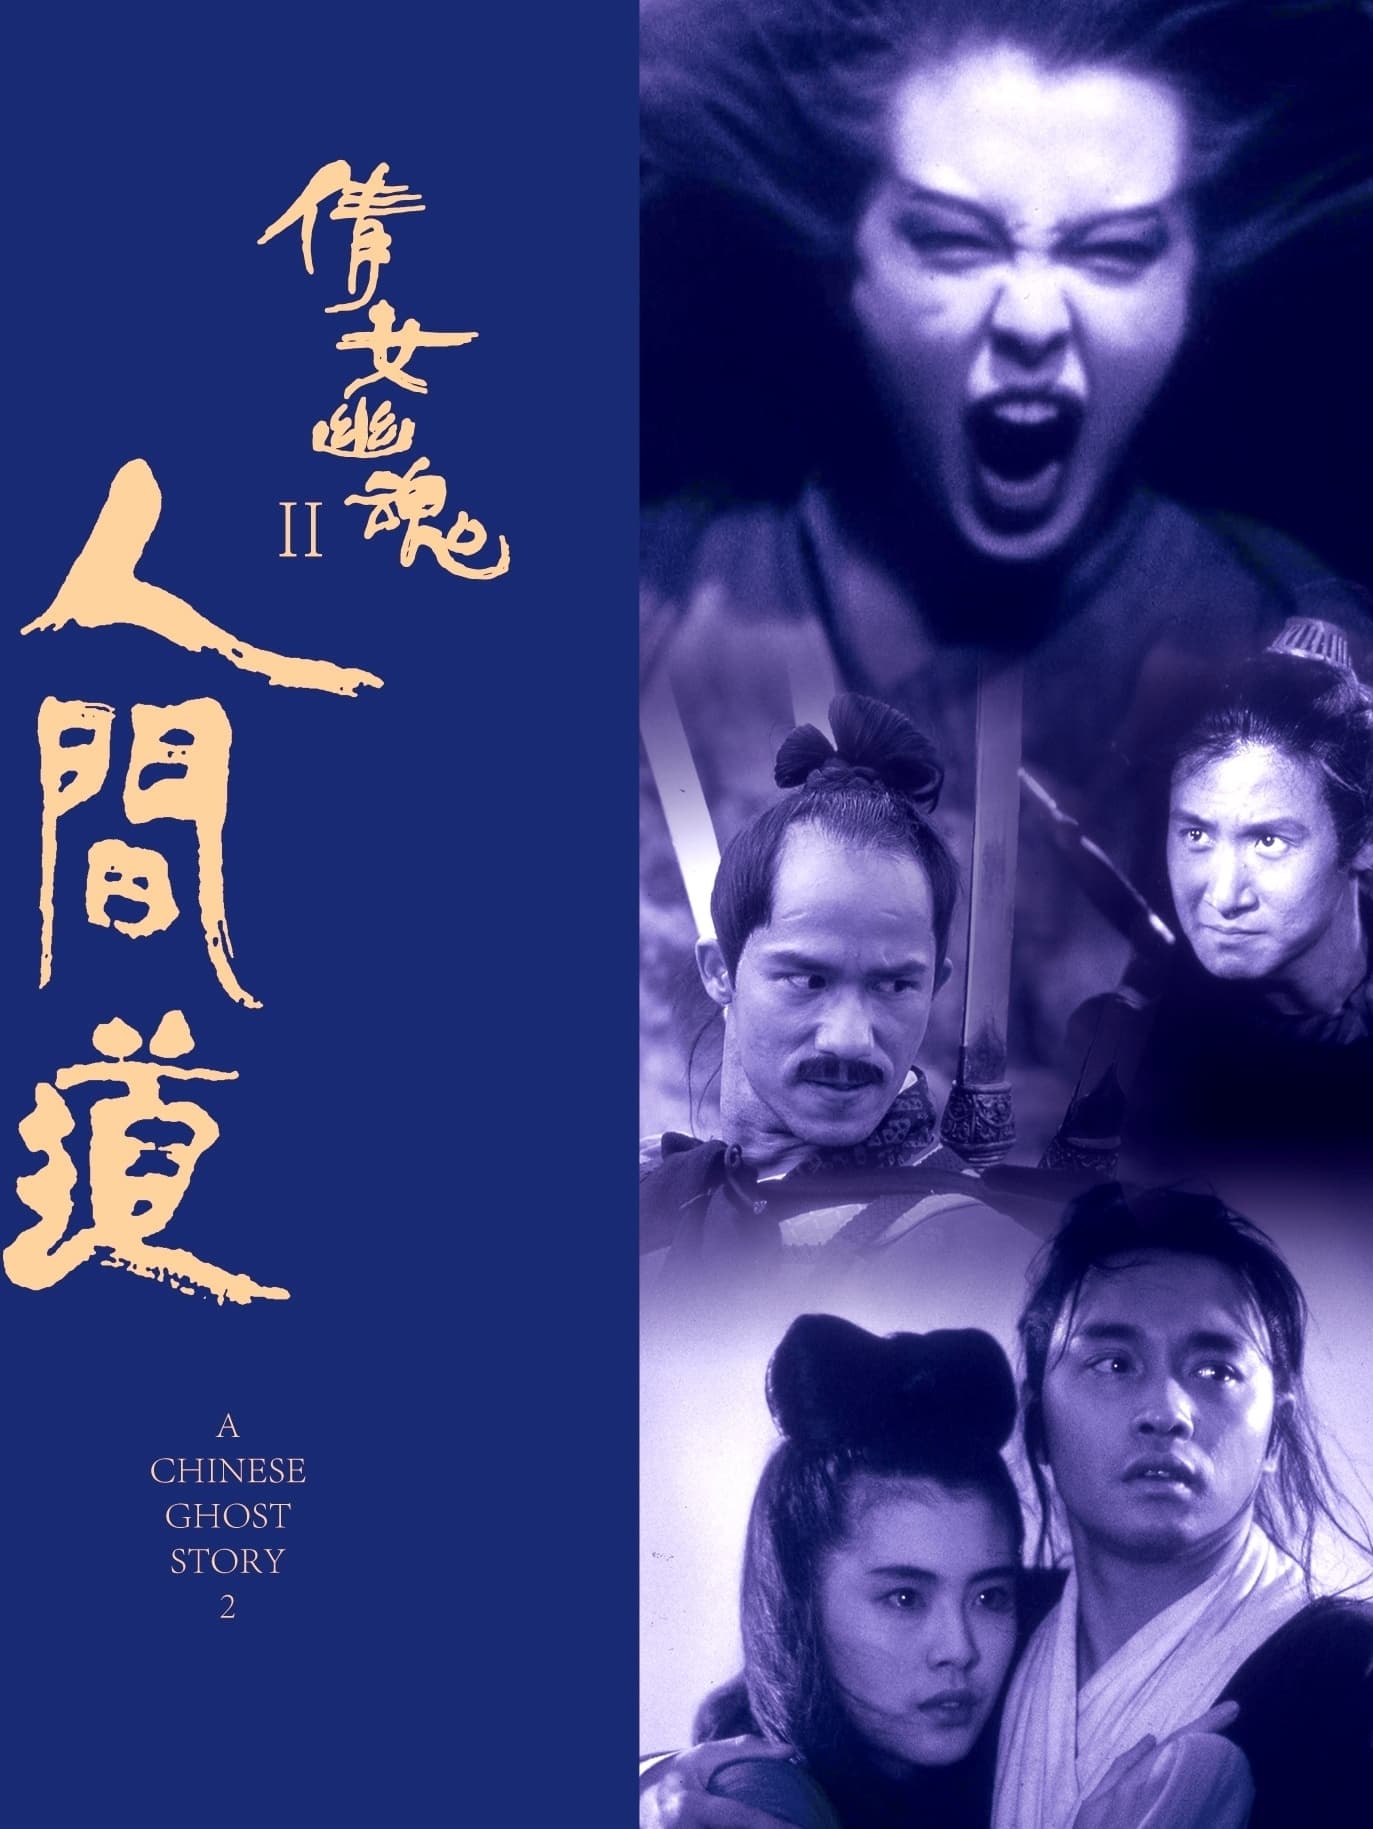 Thiện Nữ U Hồn 2 (A Chinese Ghost Story 2) [1990]